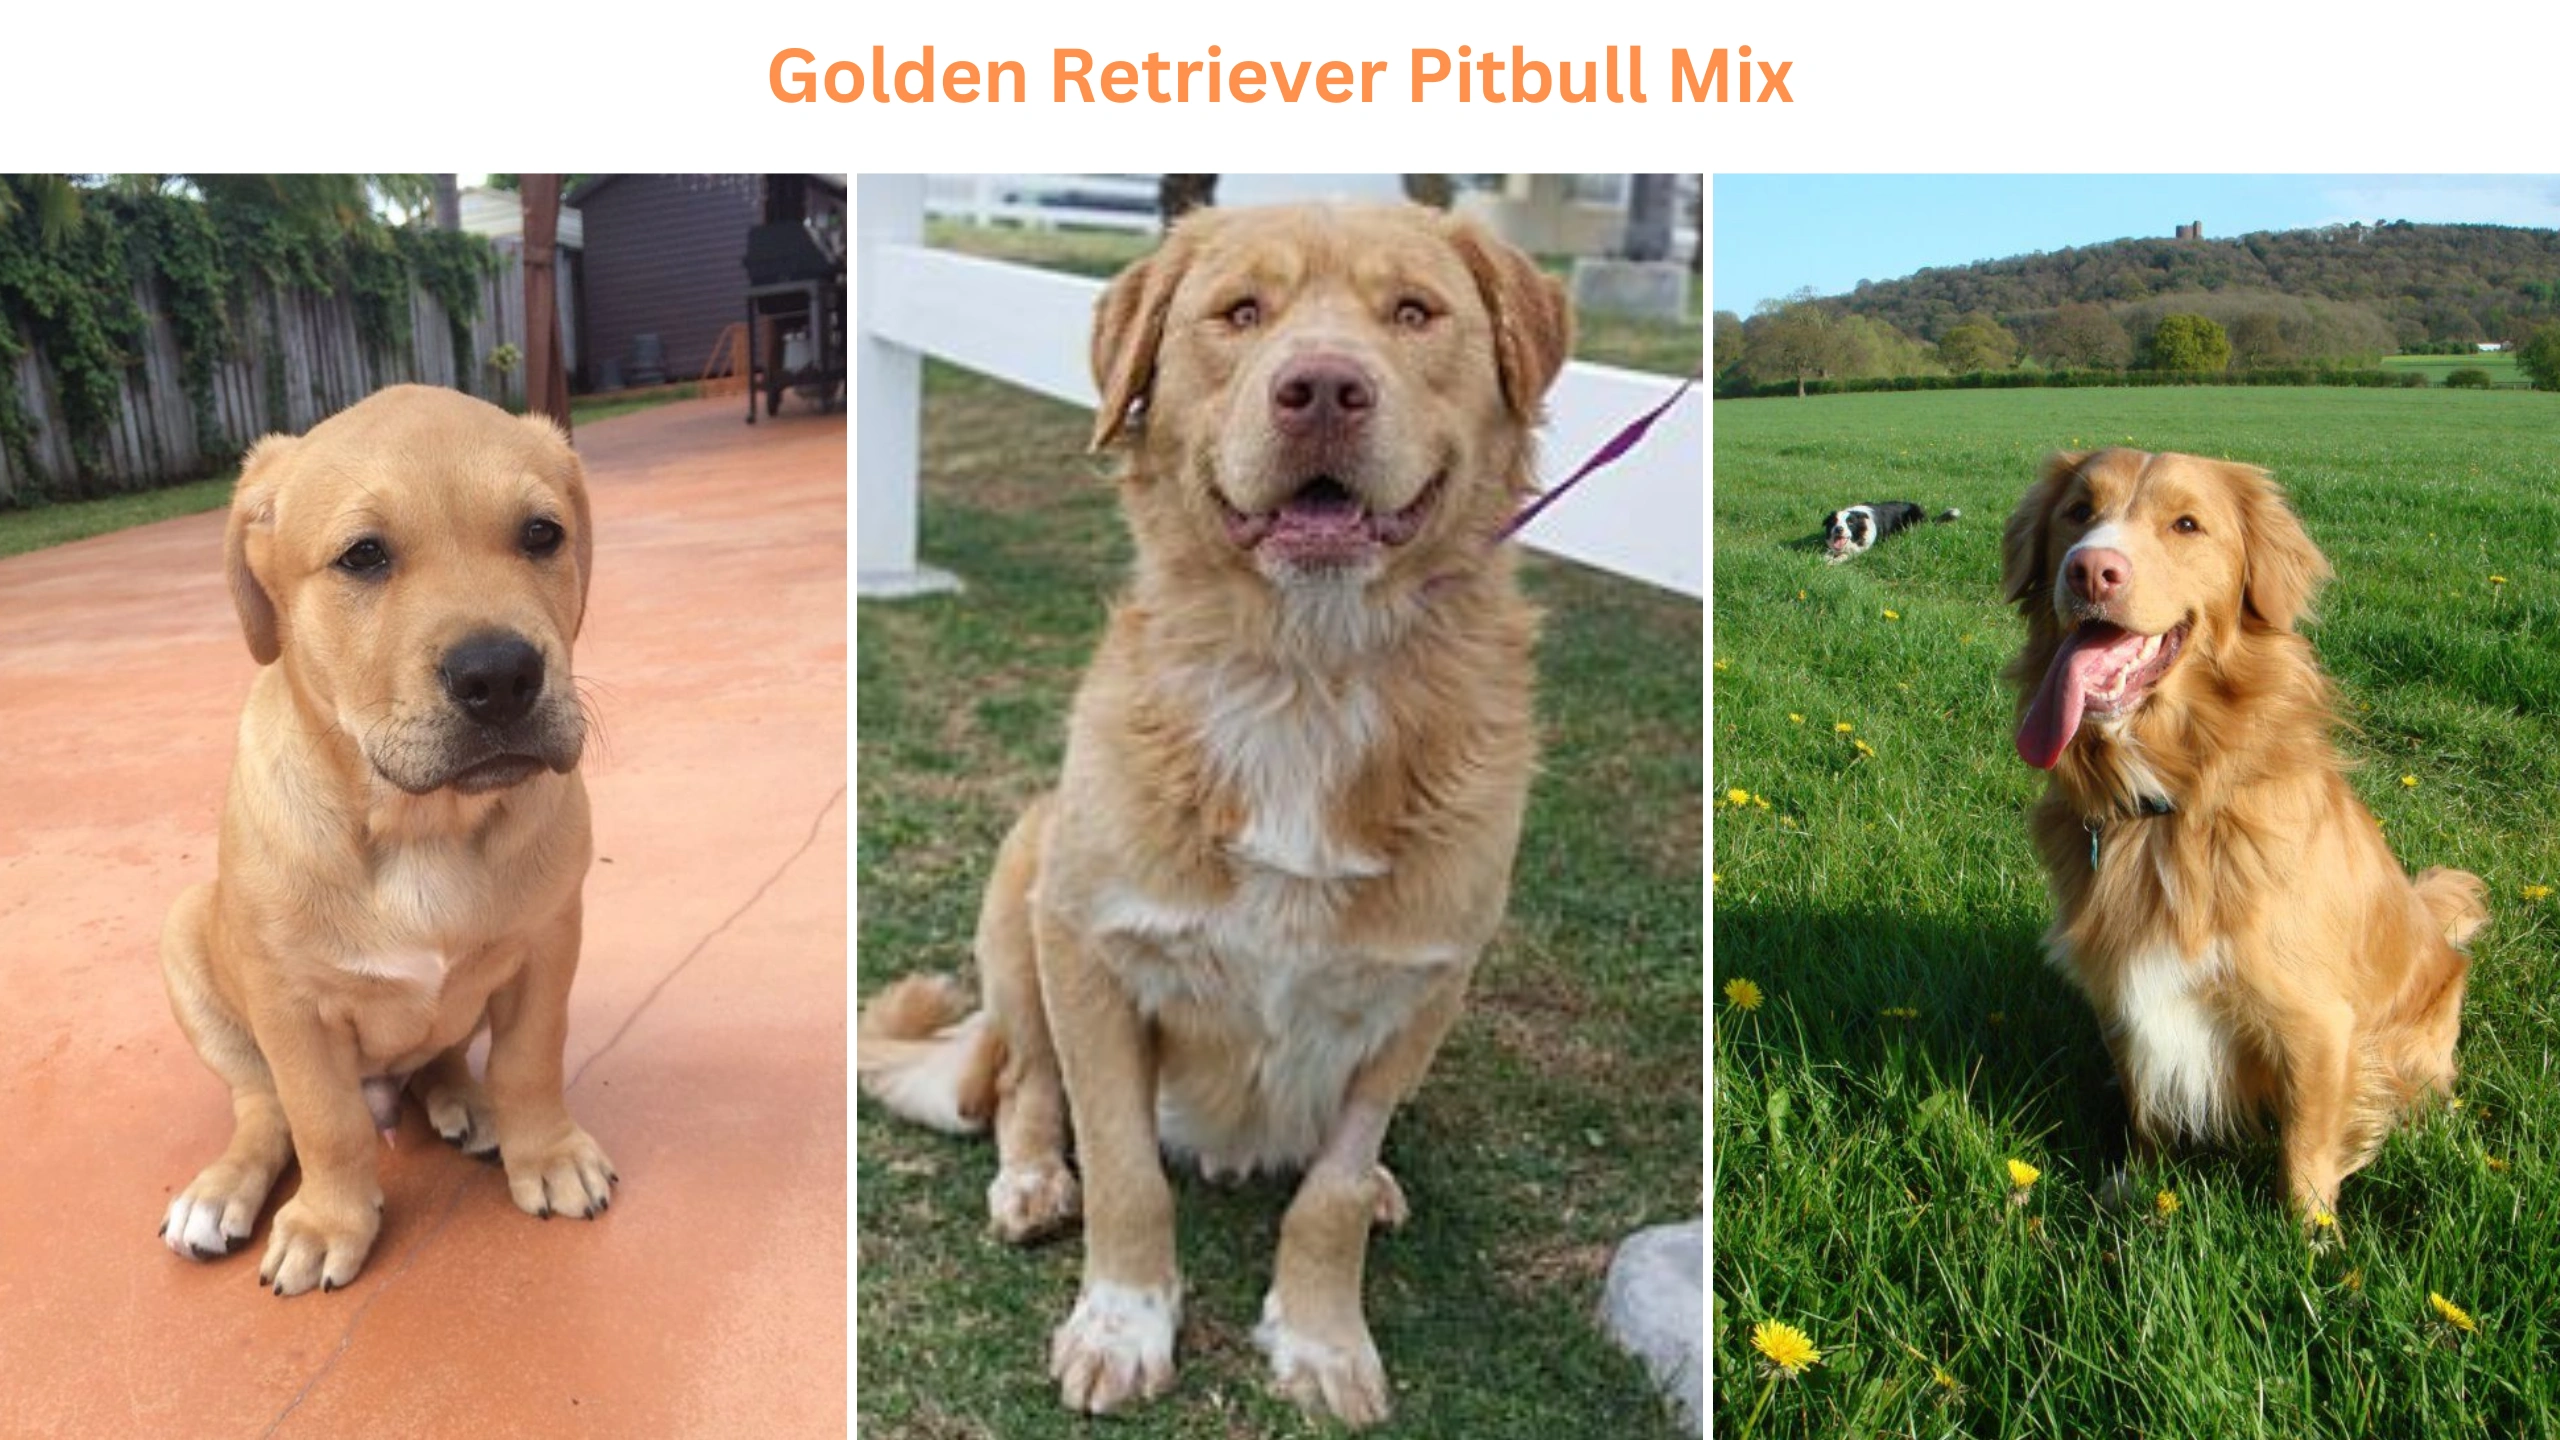 The Golden Retriever Pitbull Mix